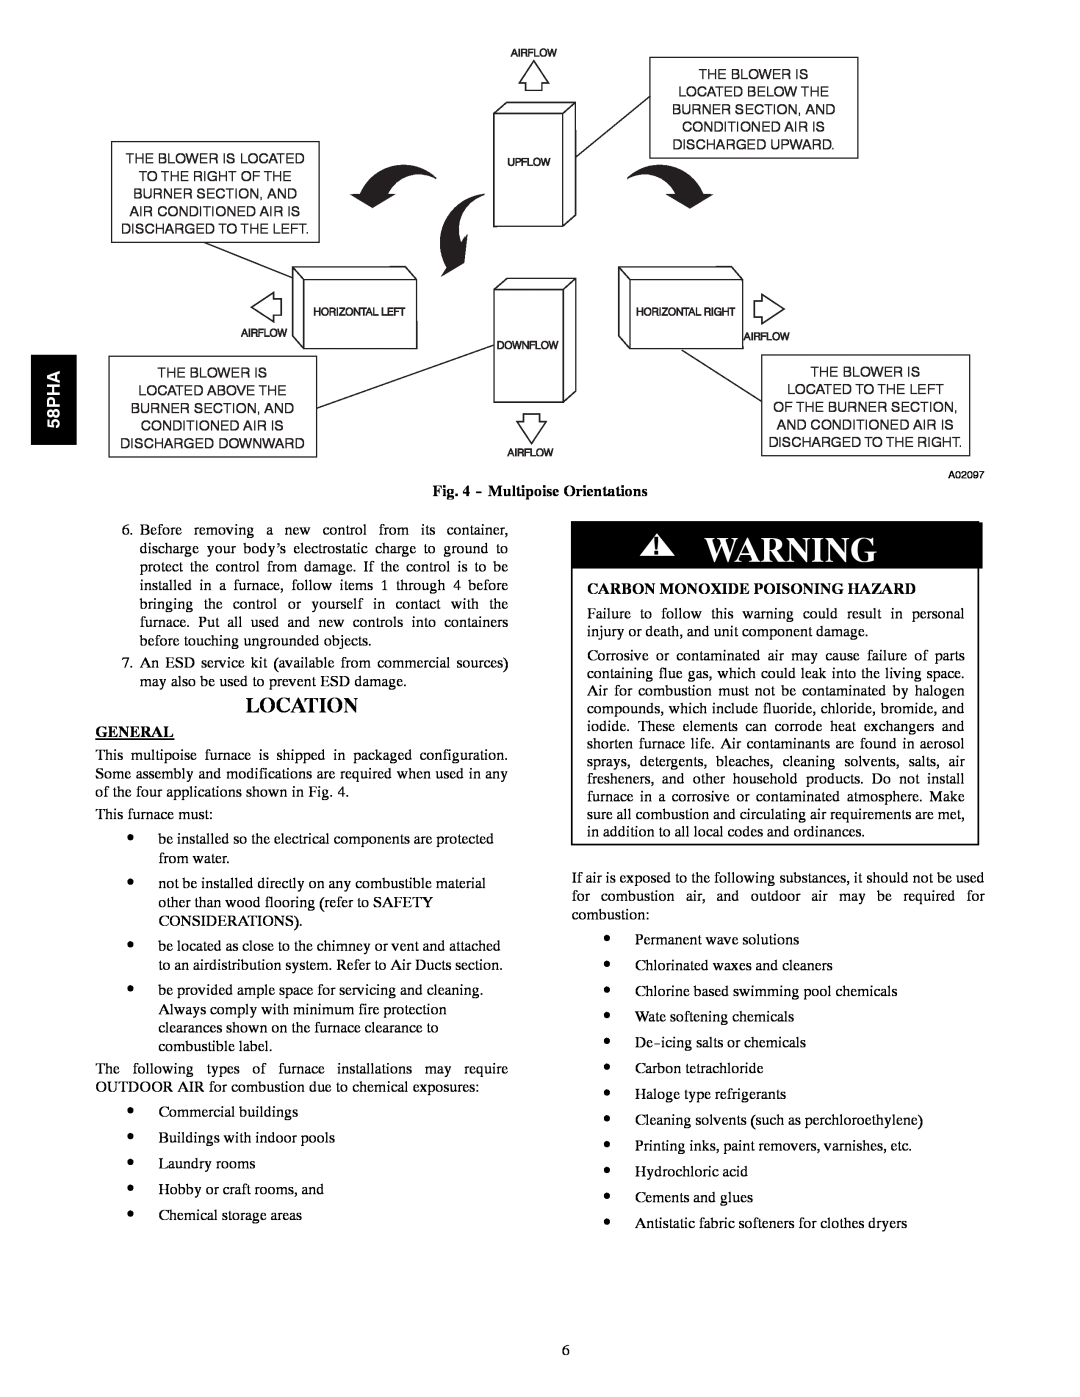 Carrier 58PHA/PHX instruction manual Location, Multipoise Orientations, General, Carbon Monoxide Poisoning Hazard 